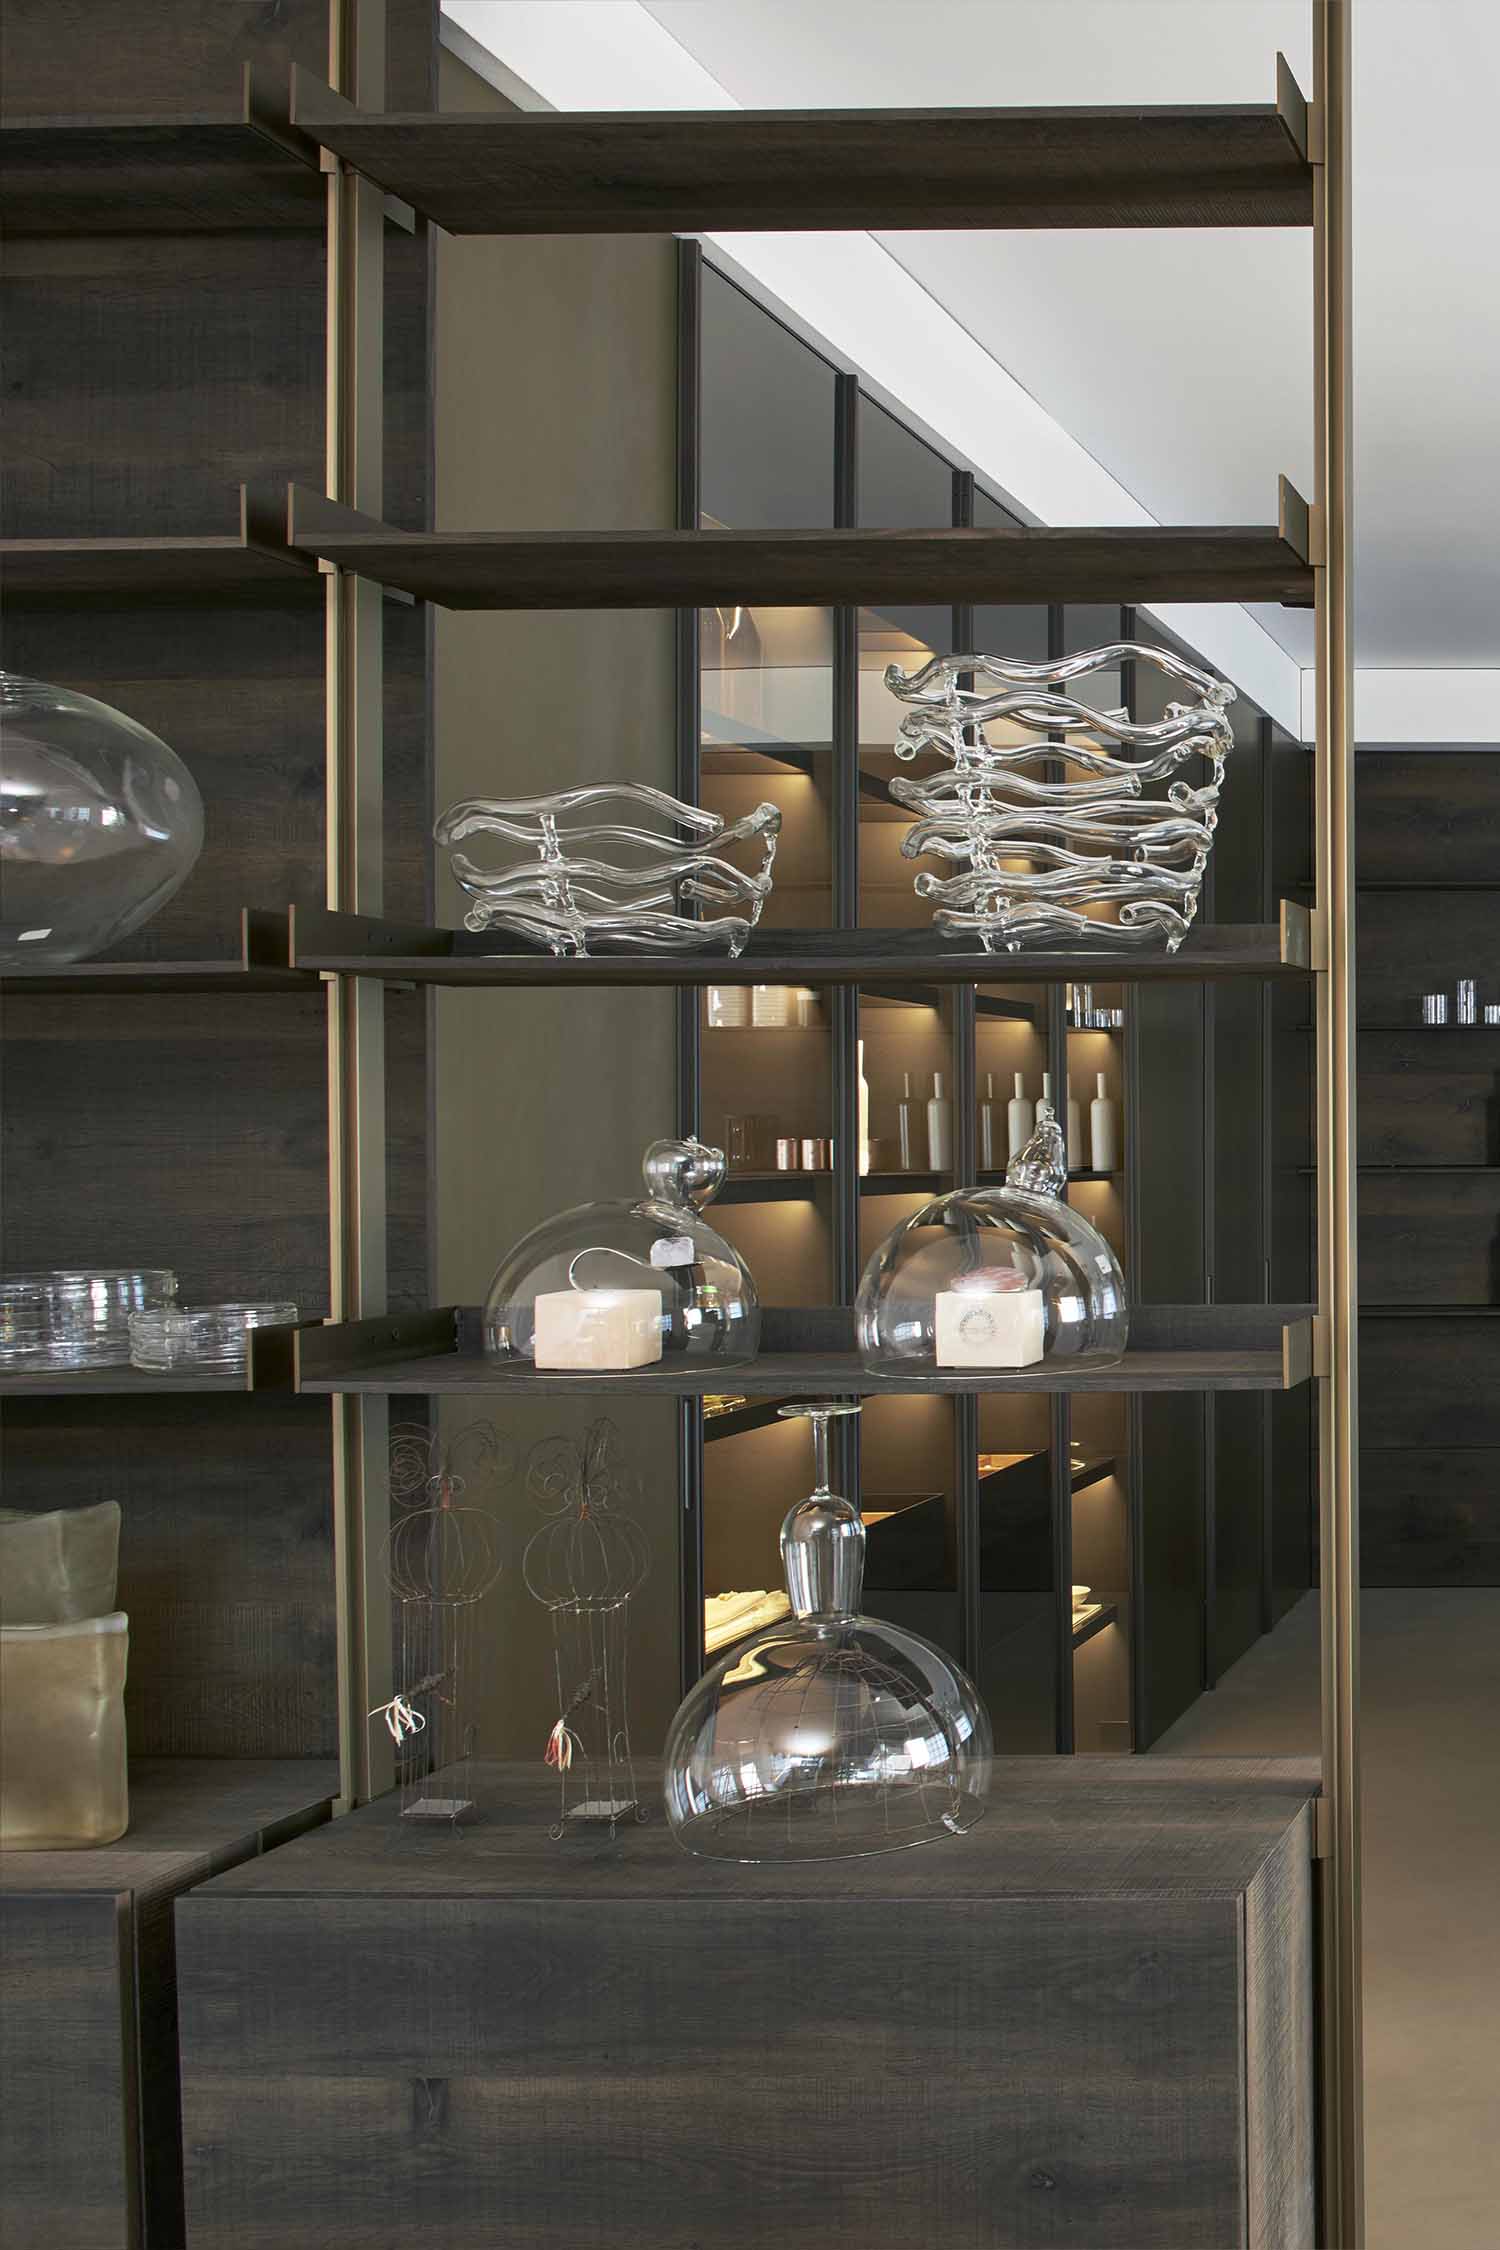 Luxury brass metal bespoke kitchen shelving designed and installed by Krieder.